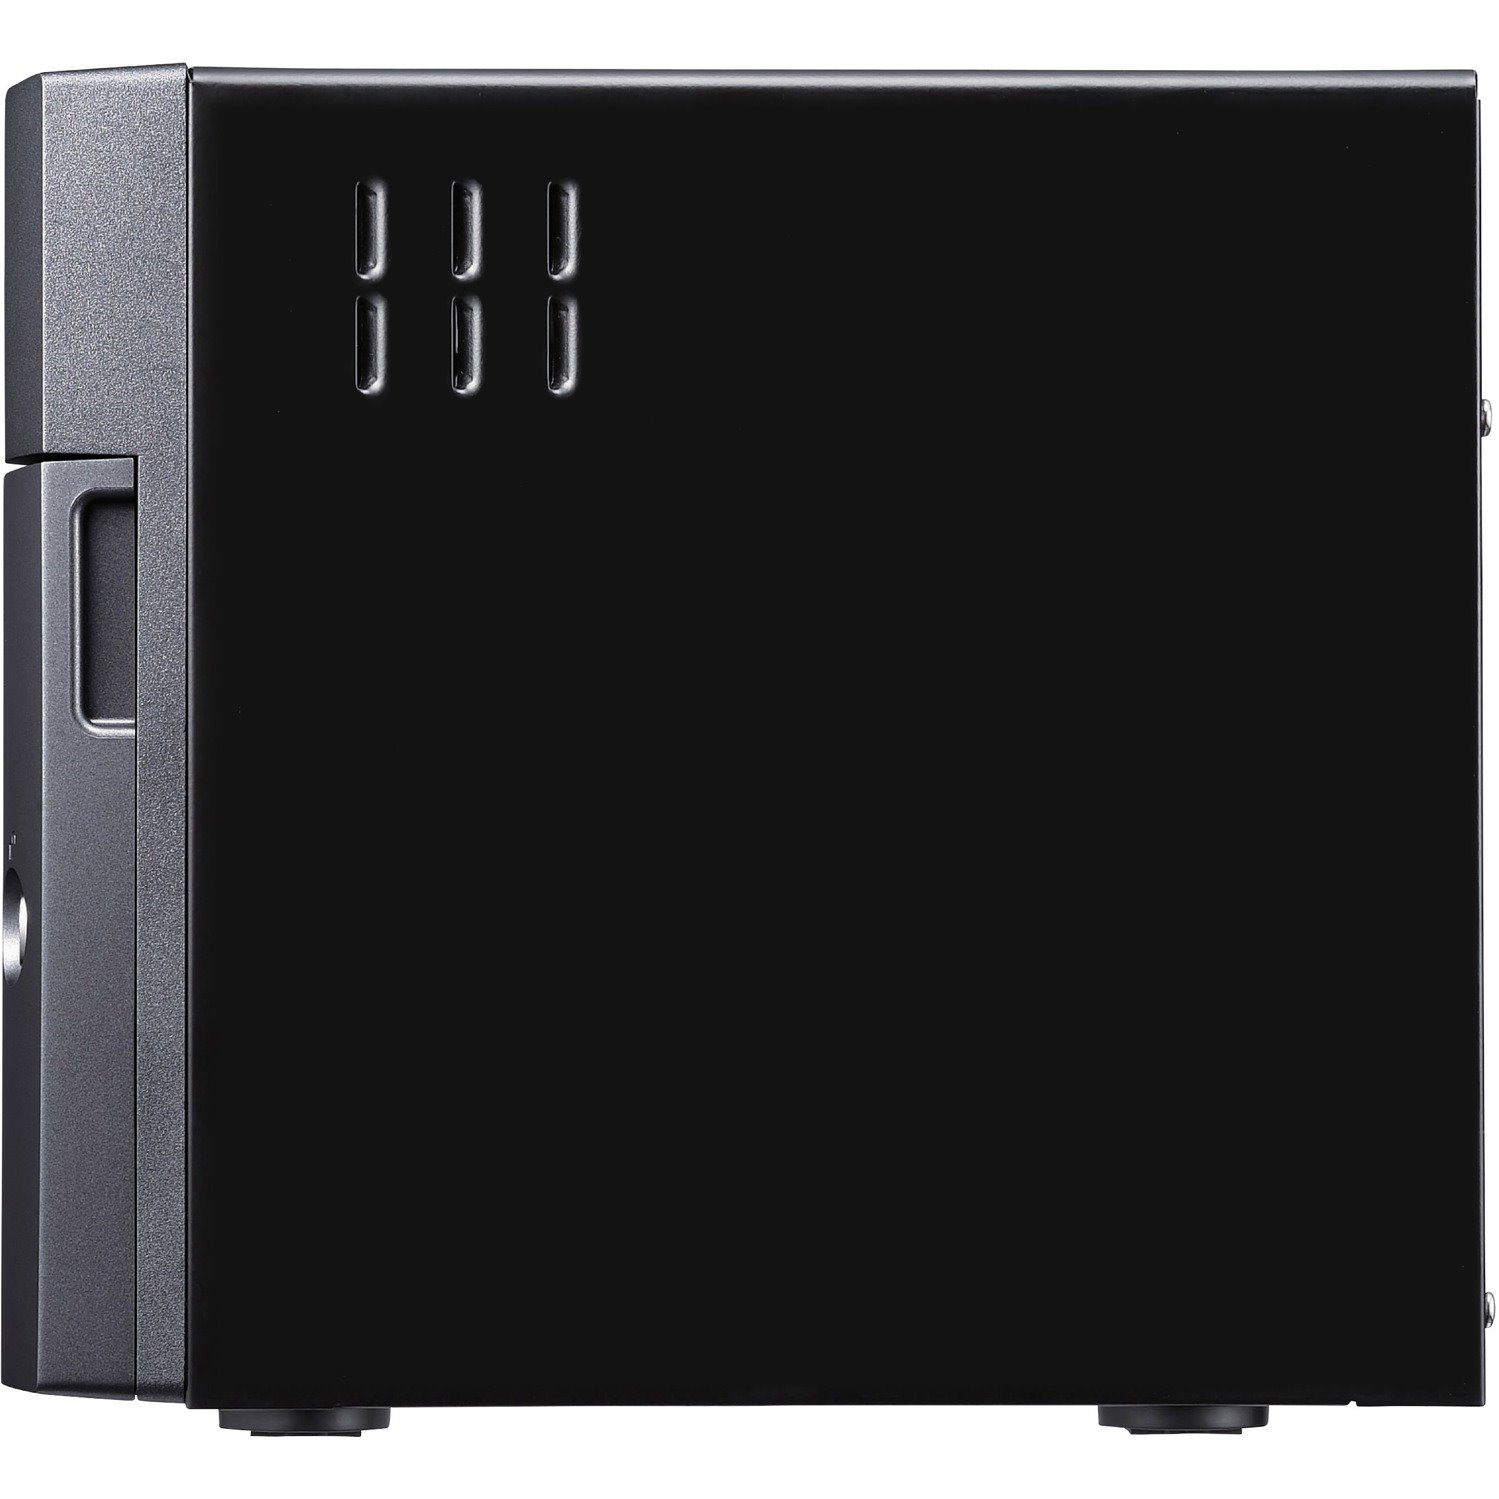 BUFFALO TeraStation 5420 4-Bay 32TB (4x8TB) Business Desktop NAS Storage Hard Drives Included